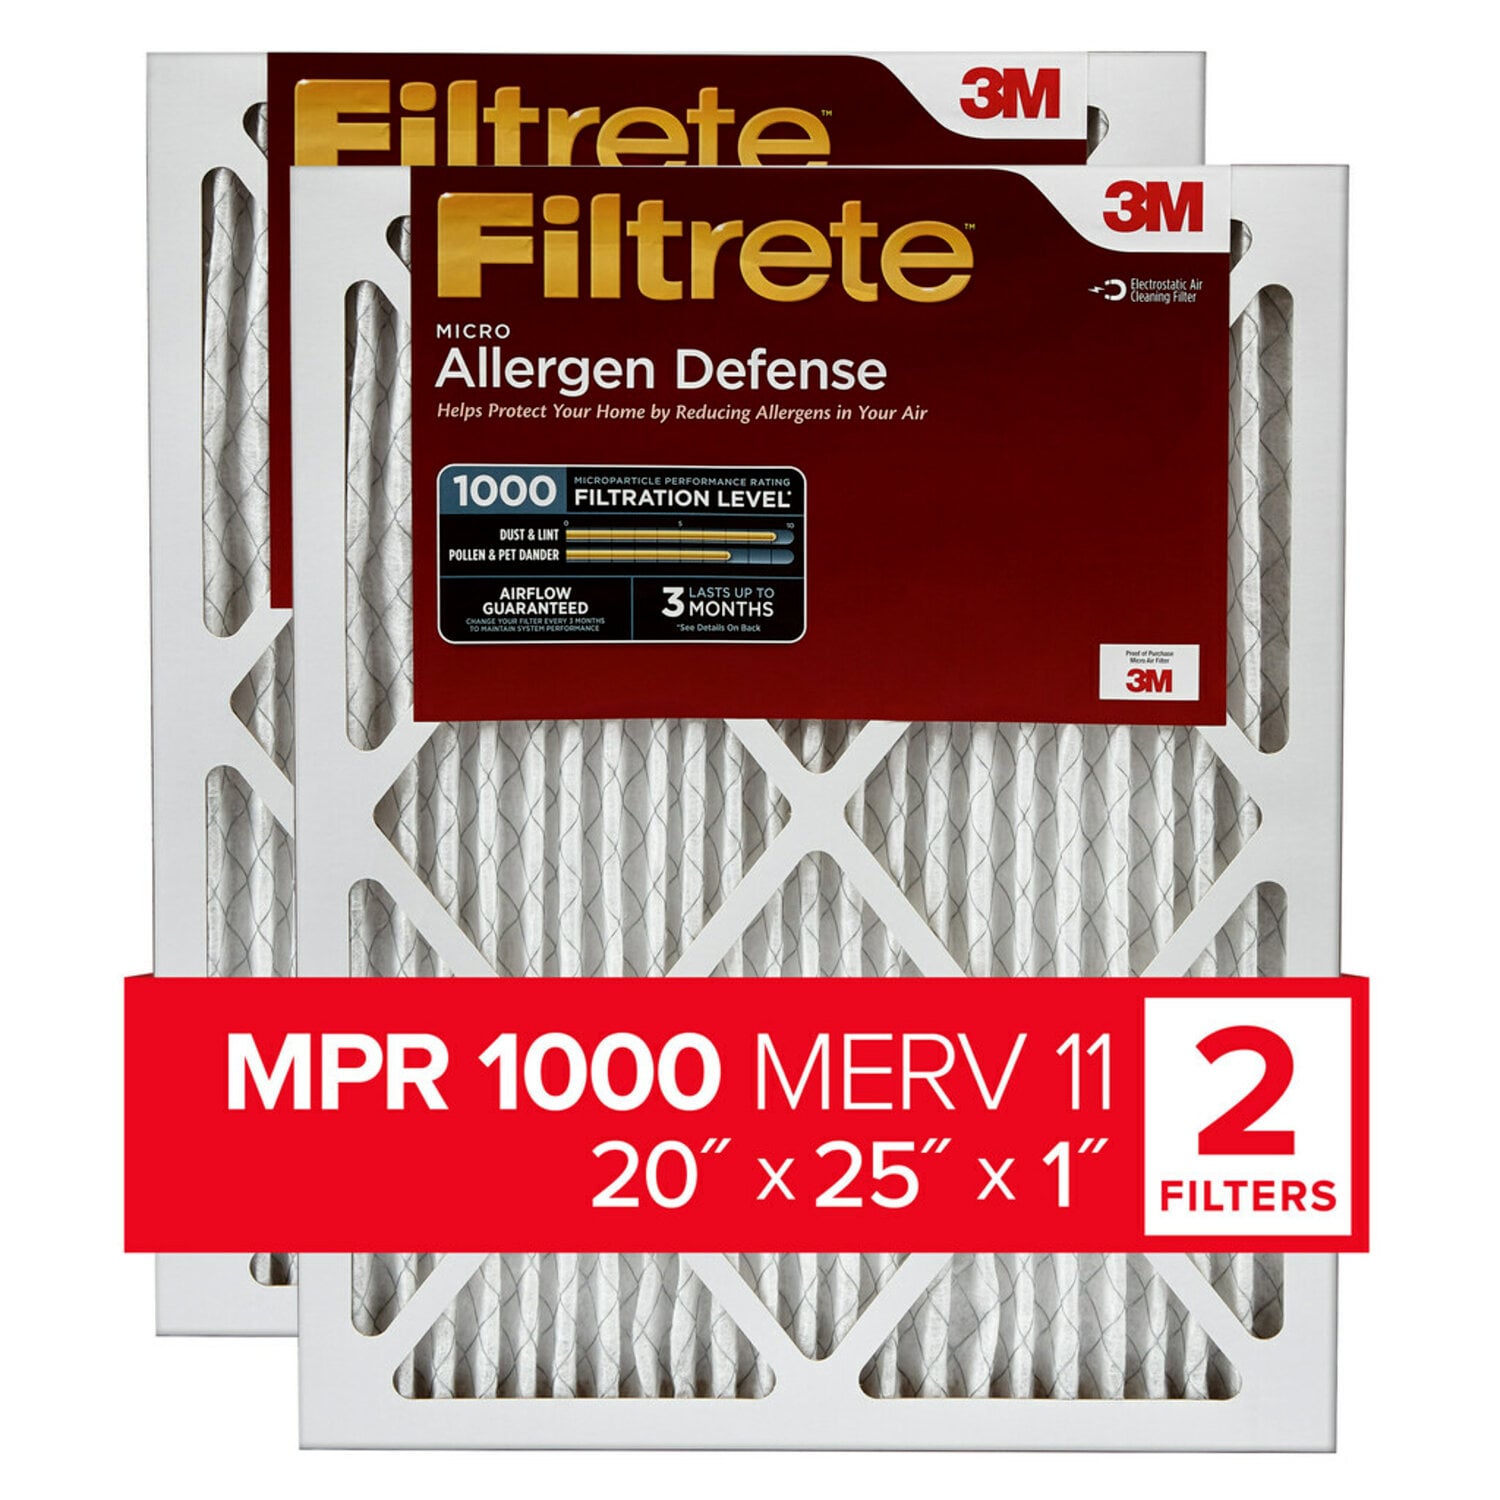 7100098574 - Filtrete Allergen Defense Filter AD03-2PK-6E-NA, MPR 1000, 20 in x 25
in x 1 in (50.8 cm x 63.5 cm x 2.5 cm), 2/pk